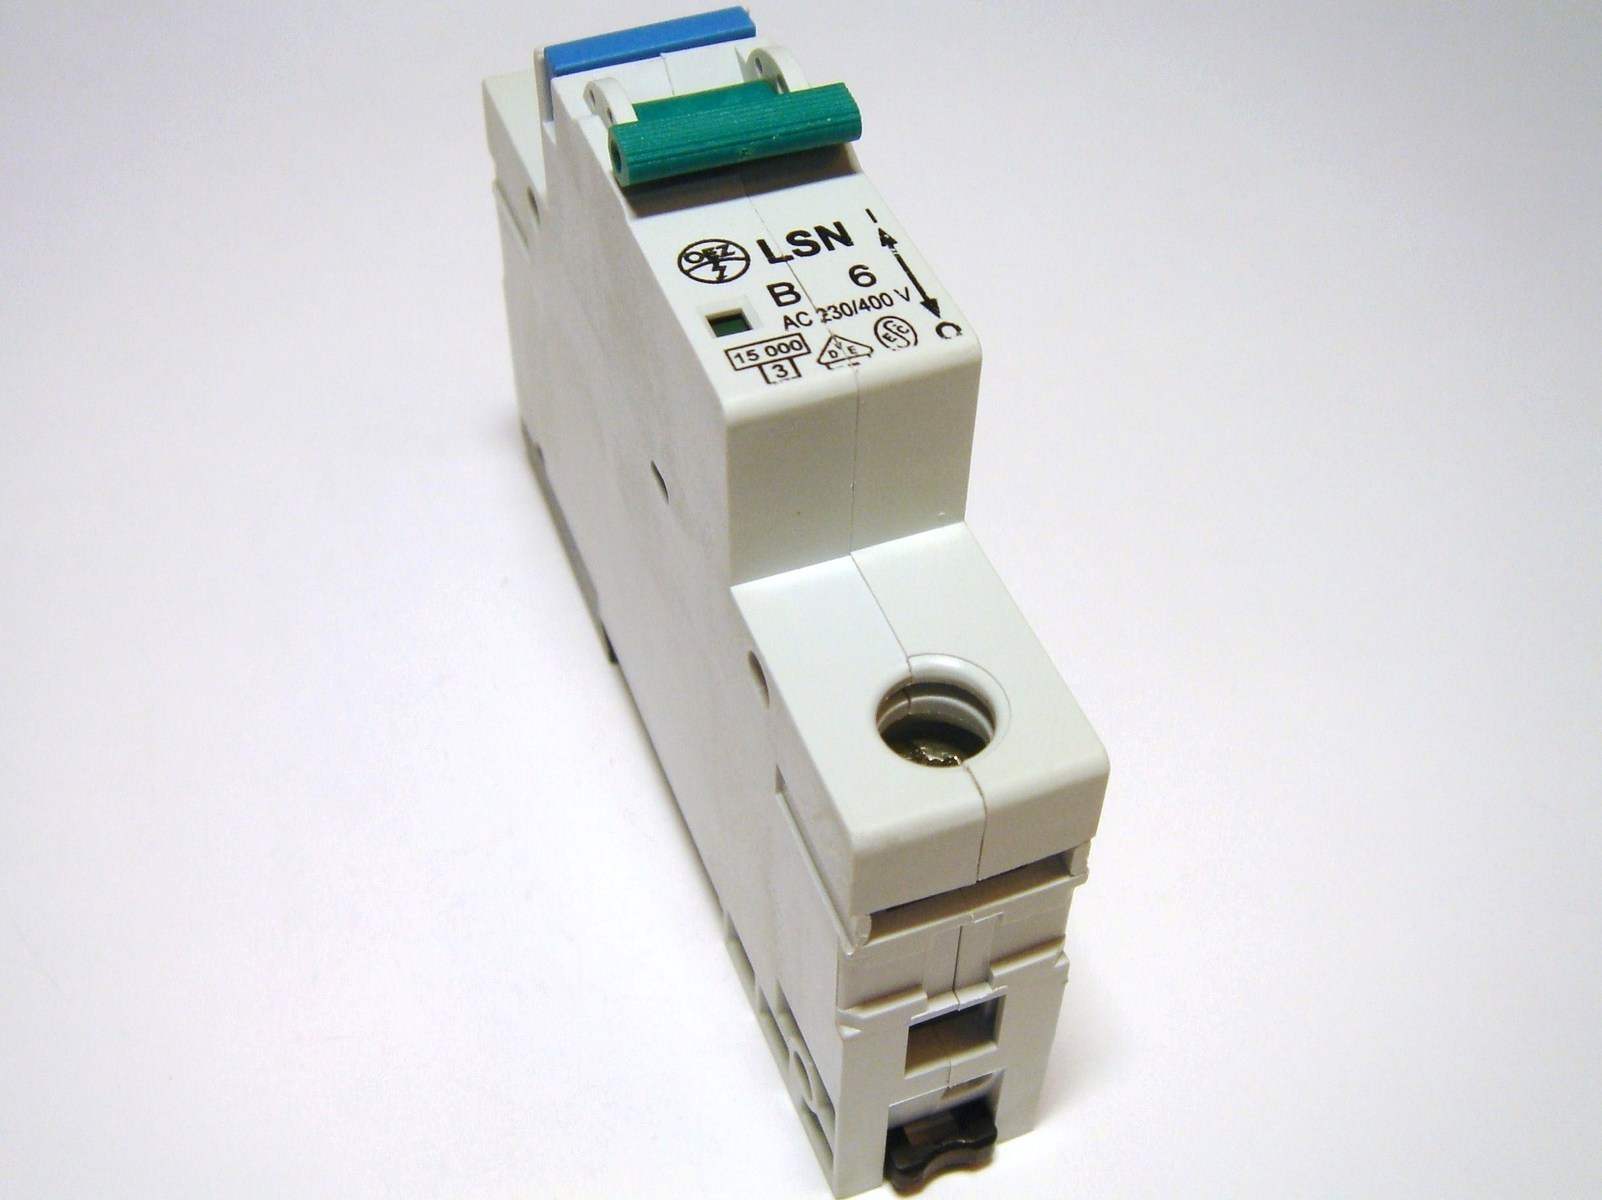 Ав 16а. Автоматический выключатель LSN 6c/2. Выключатель автоматический Oez LSN c1 1a однофазный. Выключатель автоматический g101c06. Автомат двухполюсный 4а d LSN Oez.